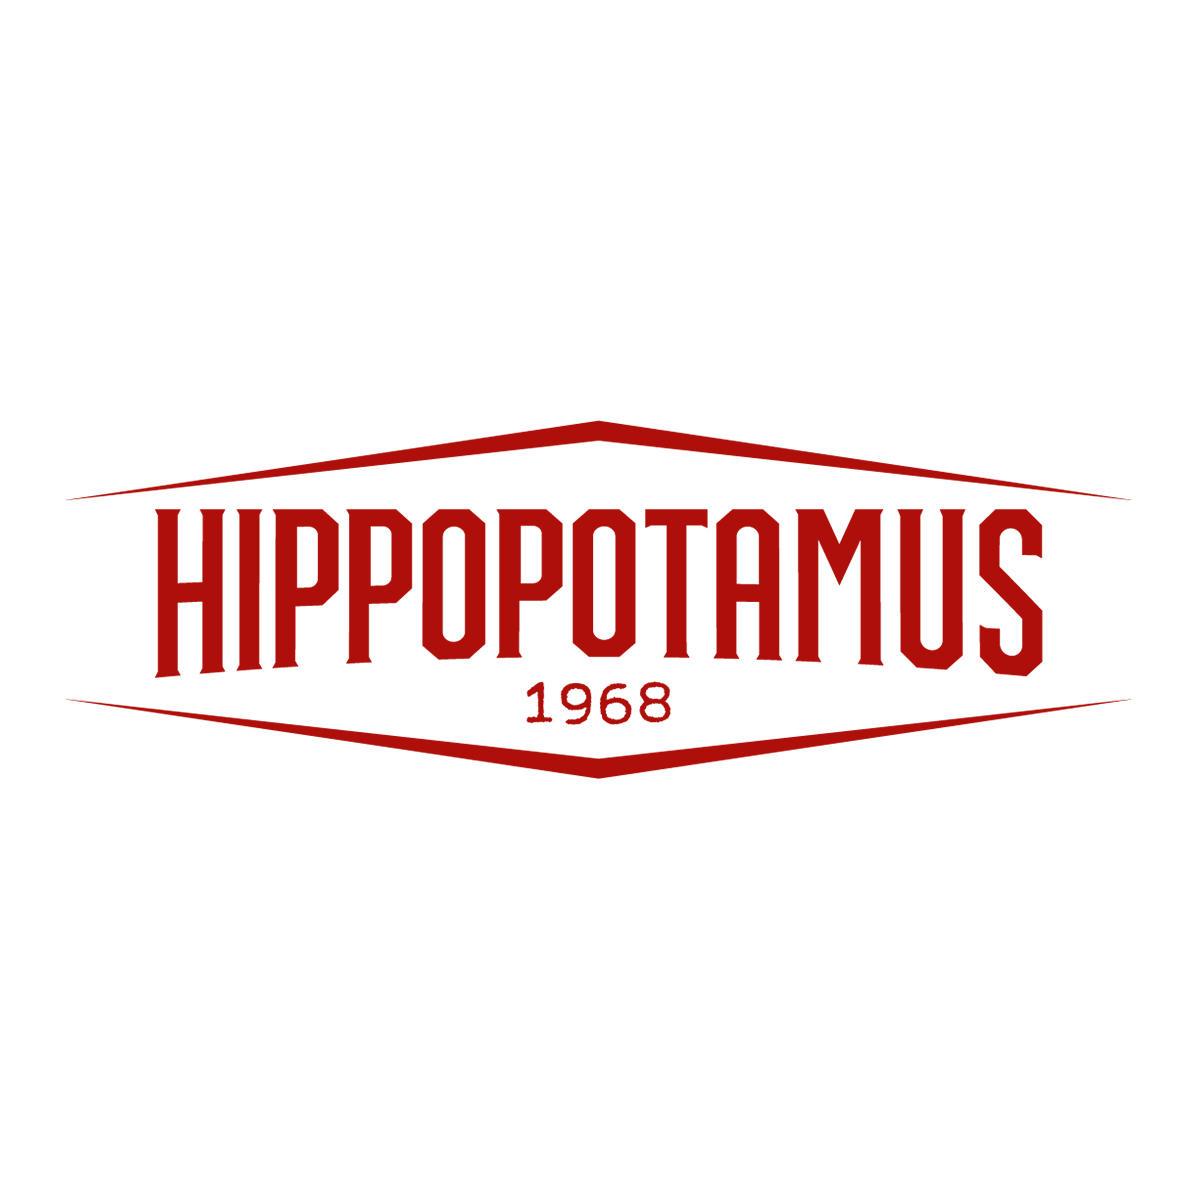 Hippopotamus Steakhouse Paris